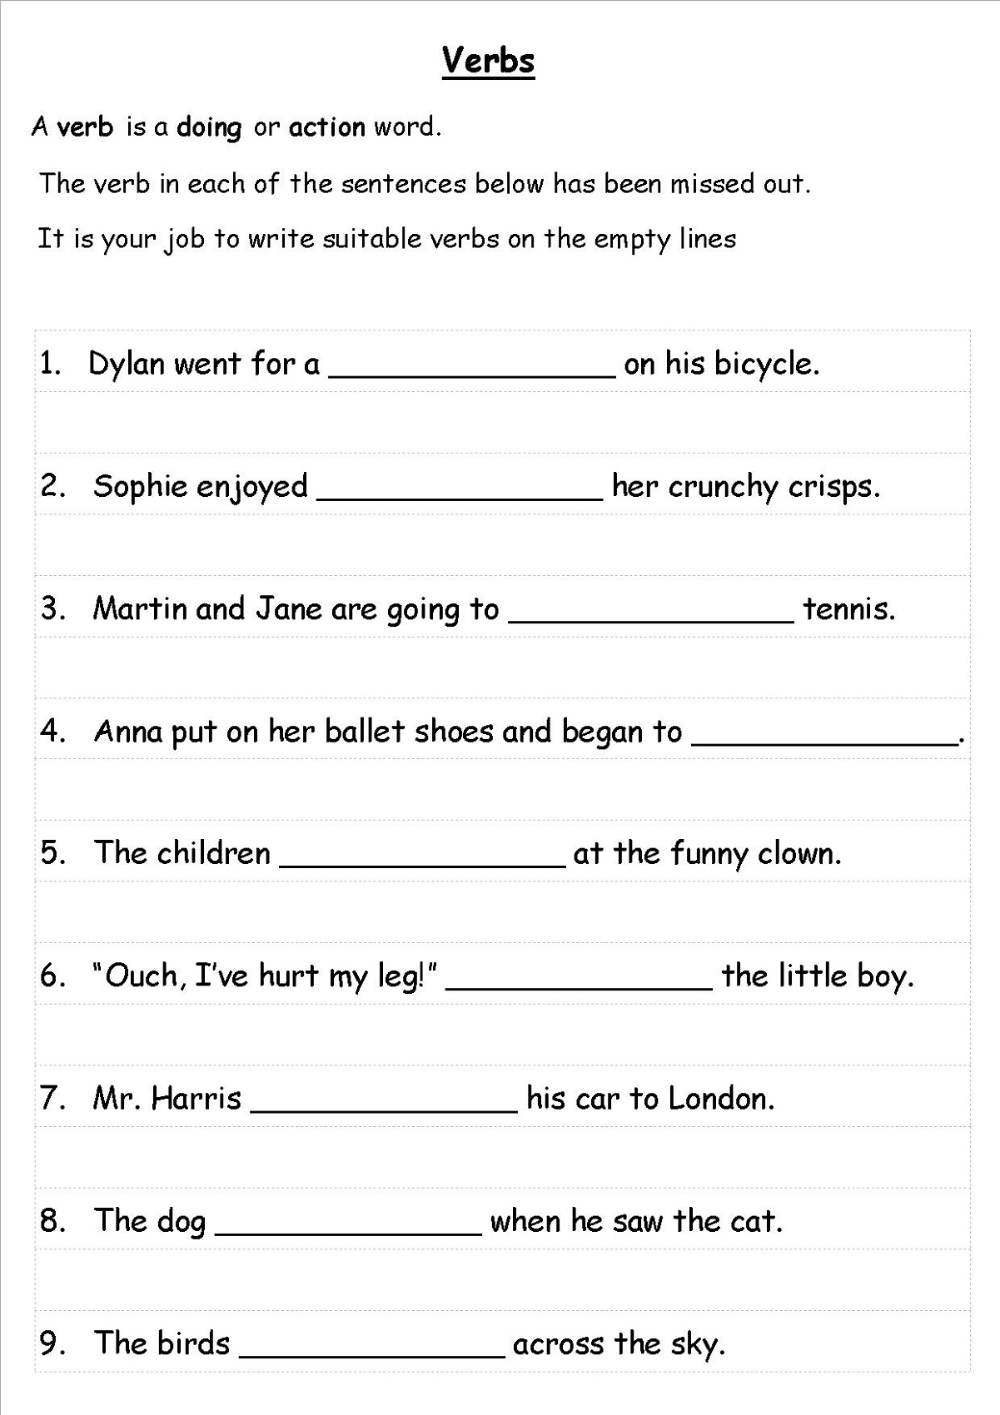 KS2 English Worksheets Printable Ks2 English Worksheets Printable English Worksheets English Vocabulary Words Learning